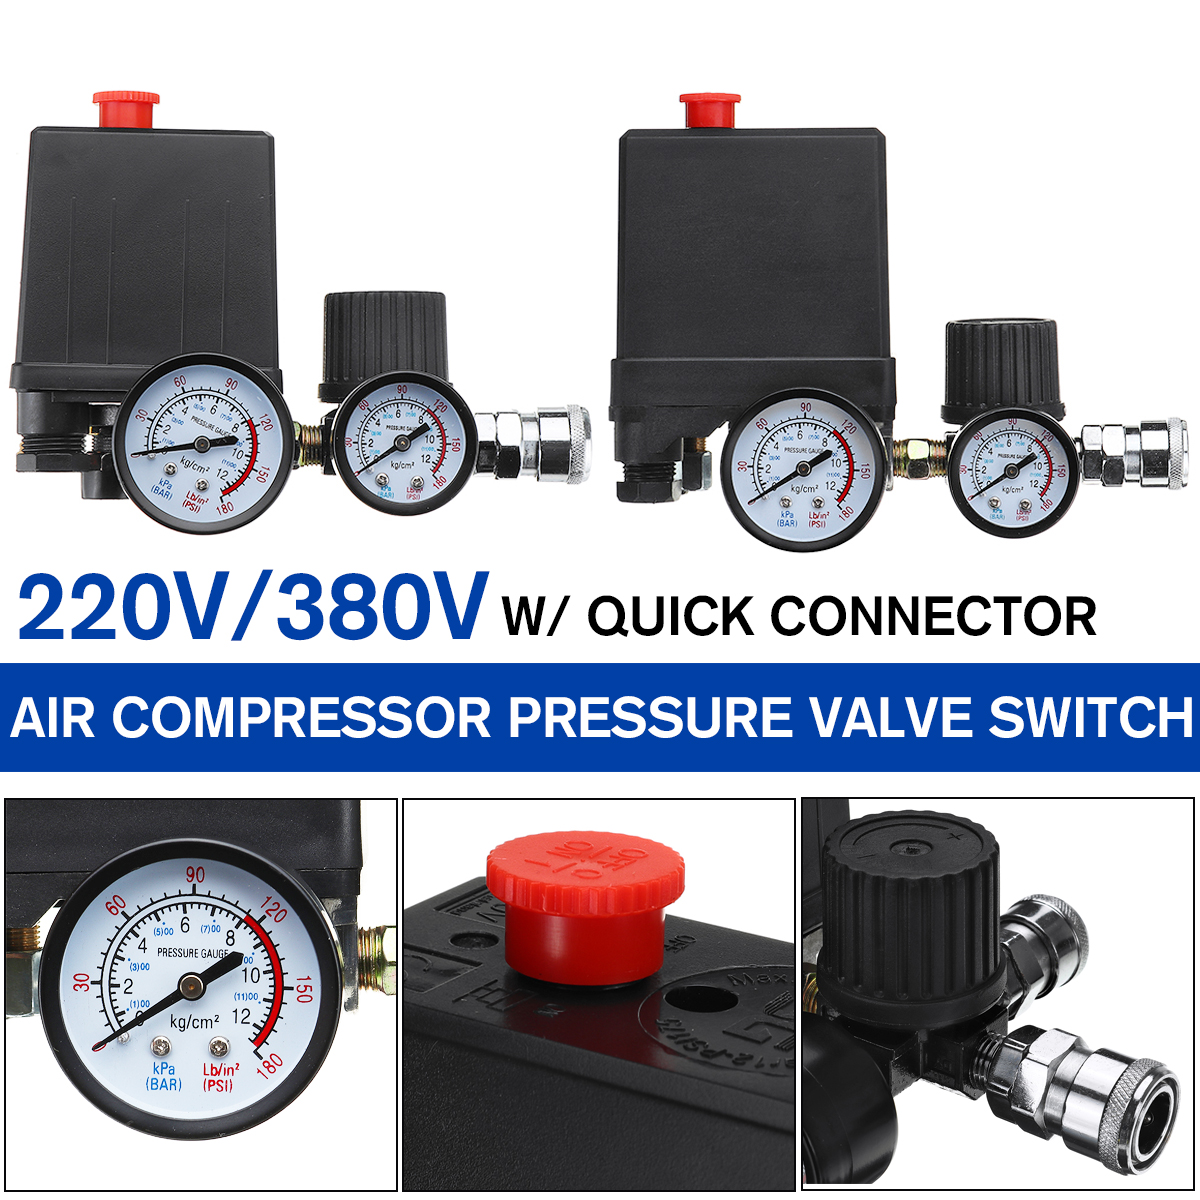 220V380V-Air-Compressor-Pressure-Switch-Control-Valve-Regulator-Gauges-with-Quick-Connector-1635191-1